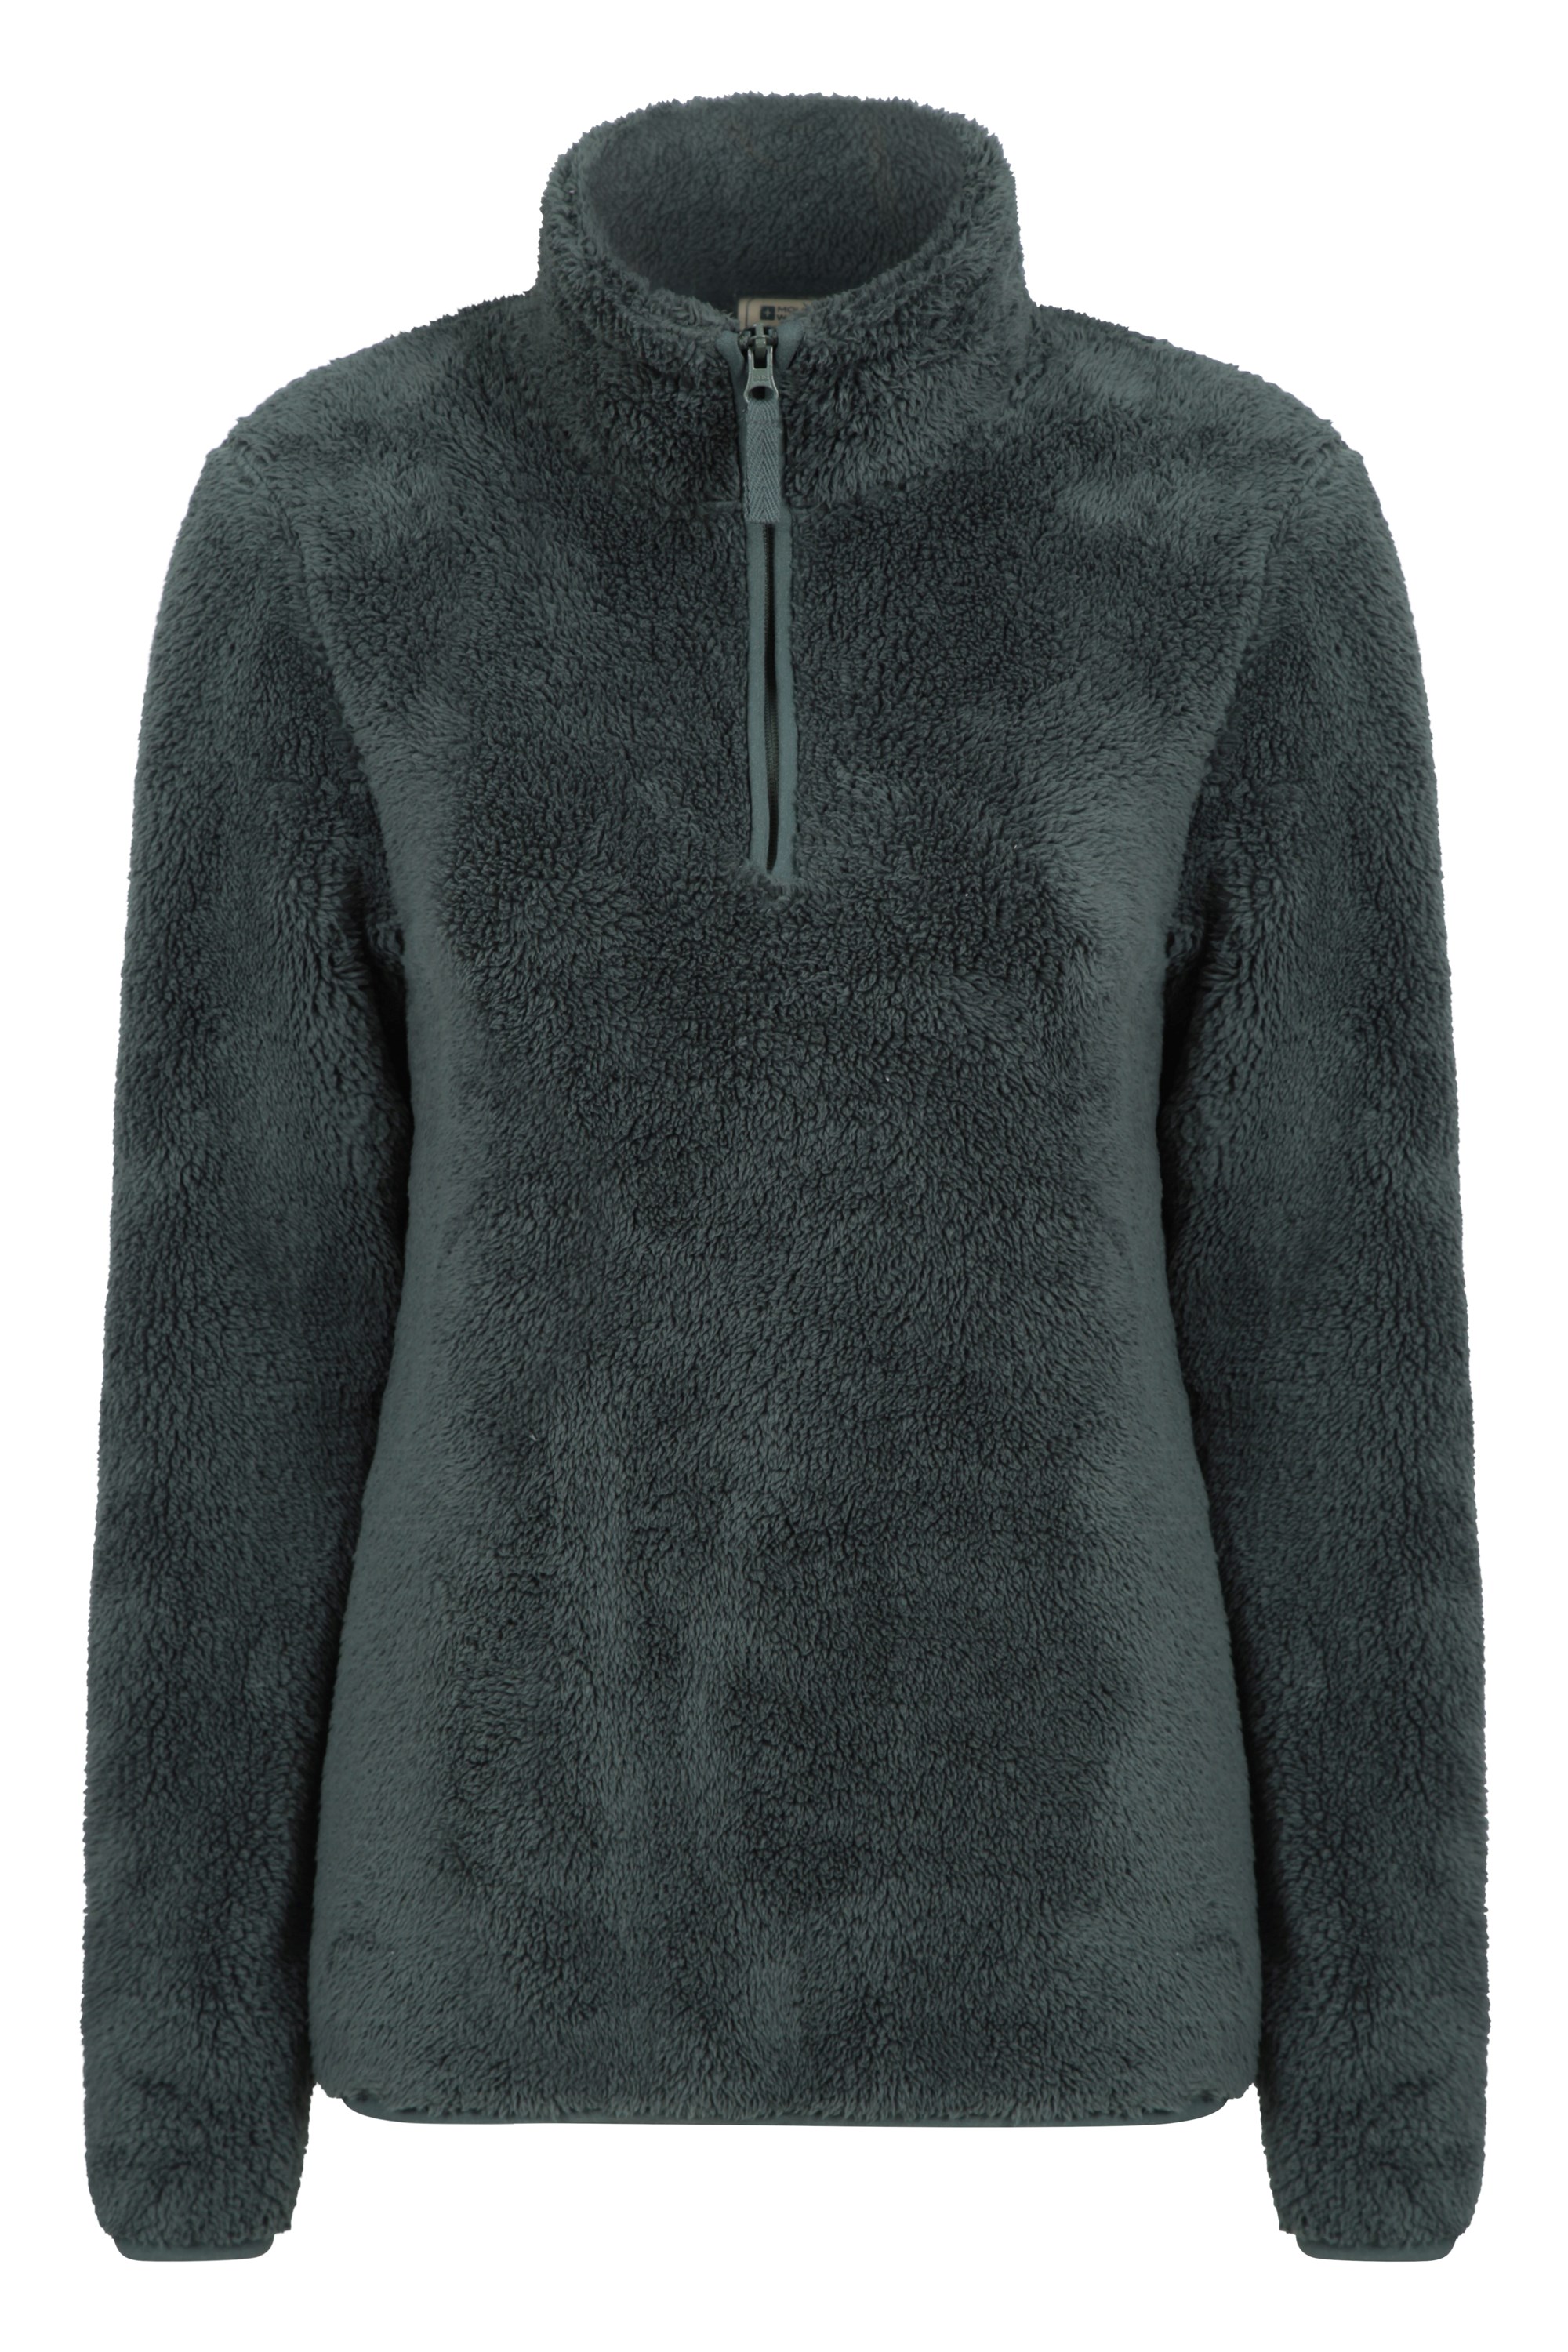 Mountain Warehouse Teddy Womens Half-Zip Fleece - Navy | Size 12